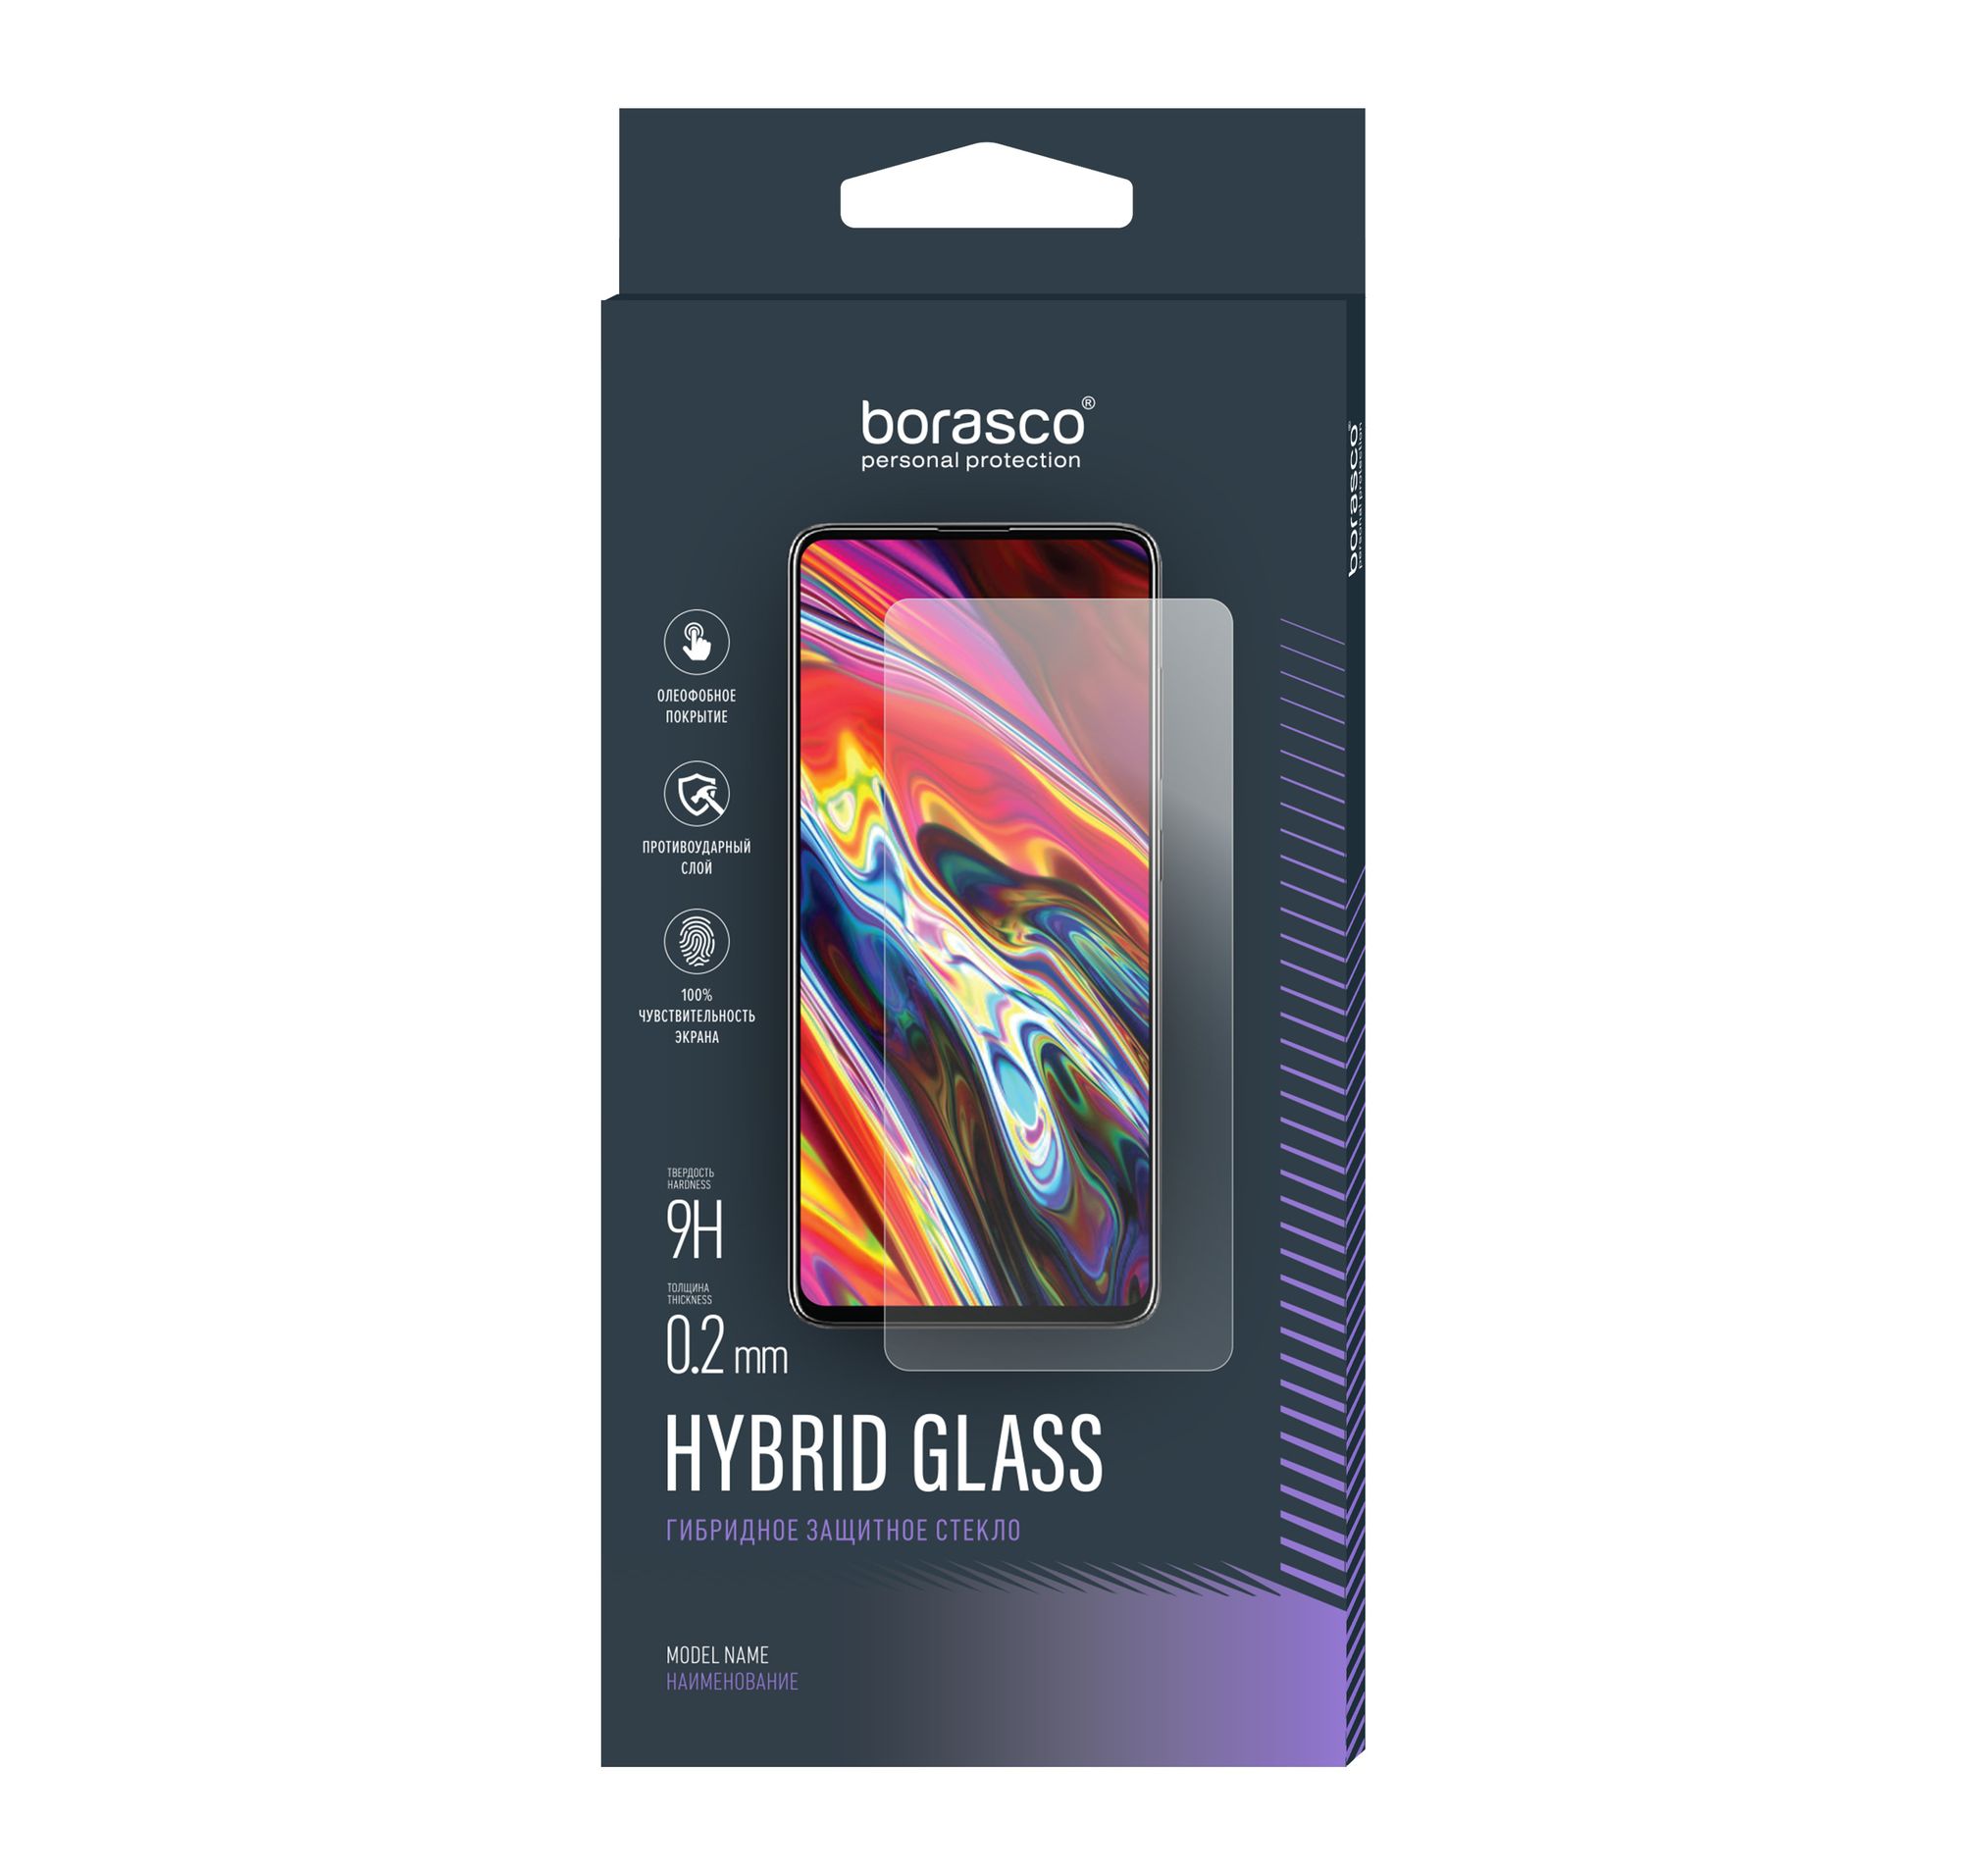 Стекло защитное Hybrid Glass VSP 0,26 мм для iPhone 6 Plus/6S Plus защитное стекло interstep глянцевое 0 3мм для iphone 6 6s